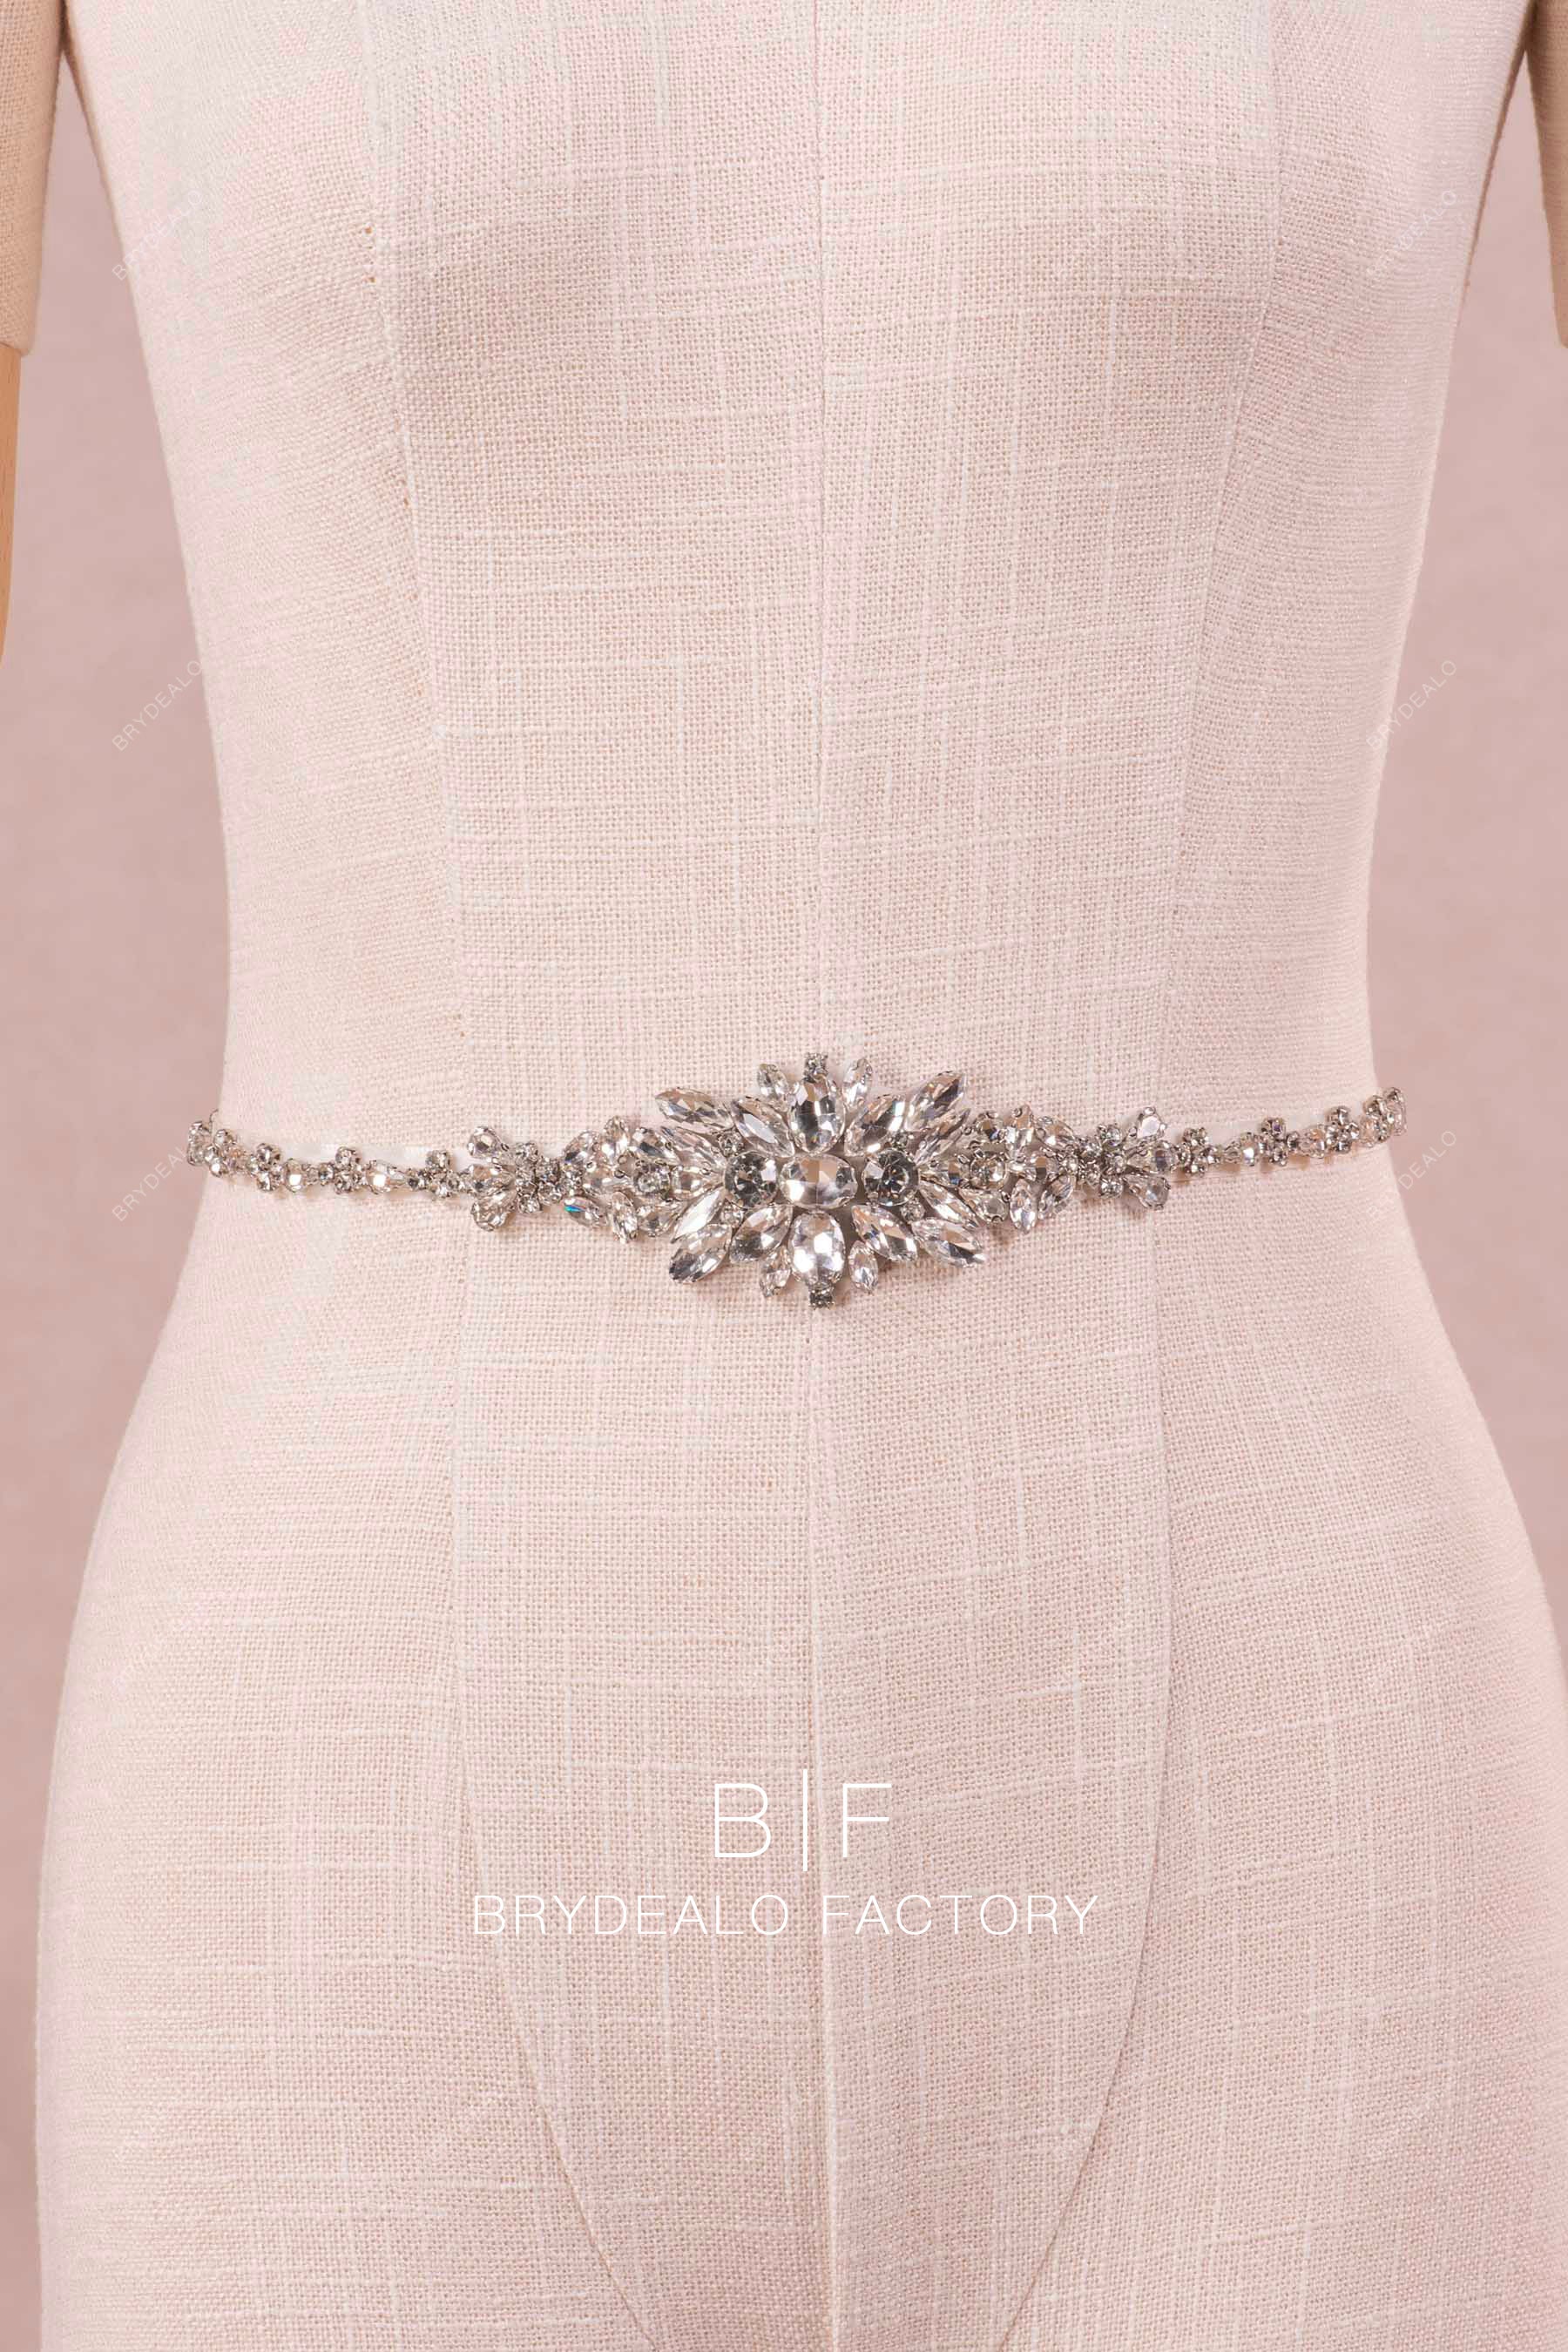 Wedding Dress Belt, Rhinestone Bridal Belt Crystal Sash